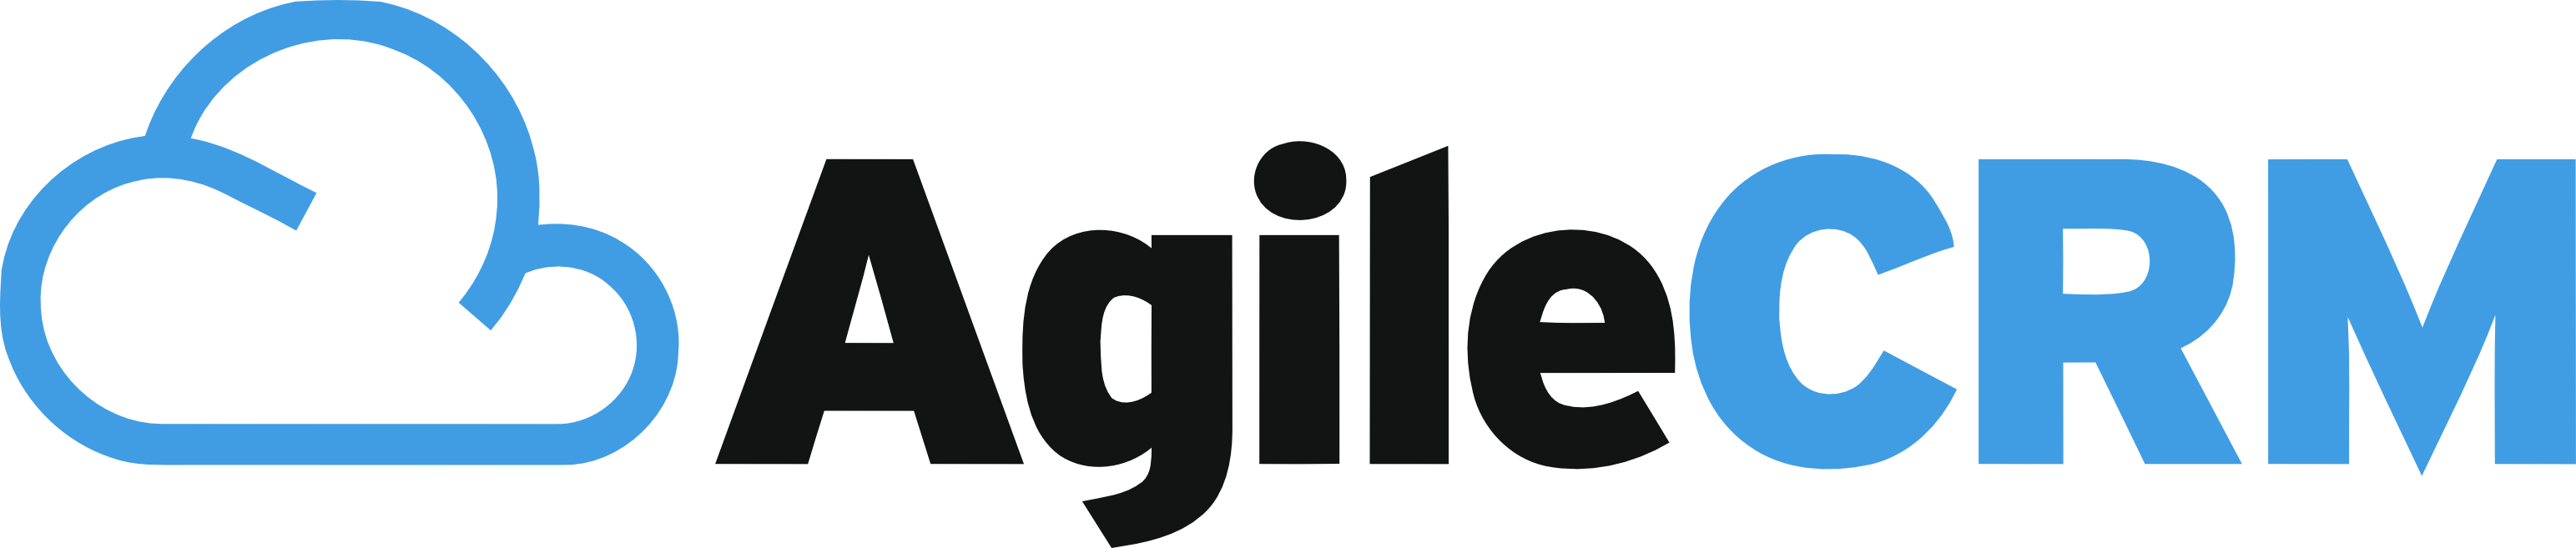 agile crm logo